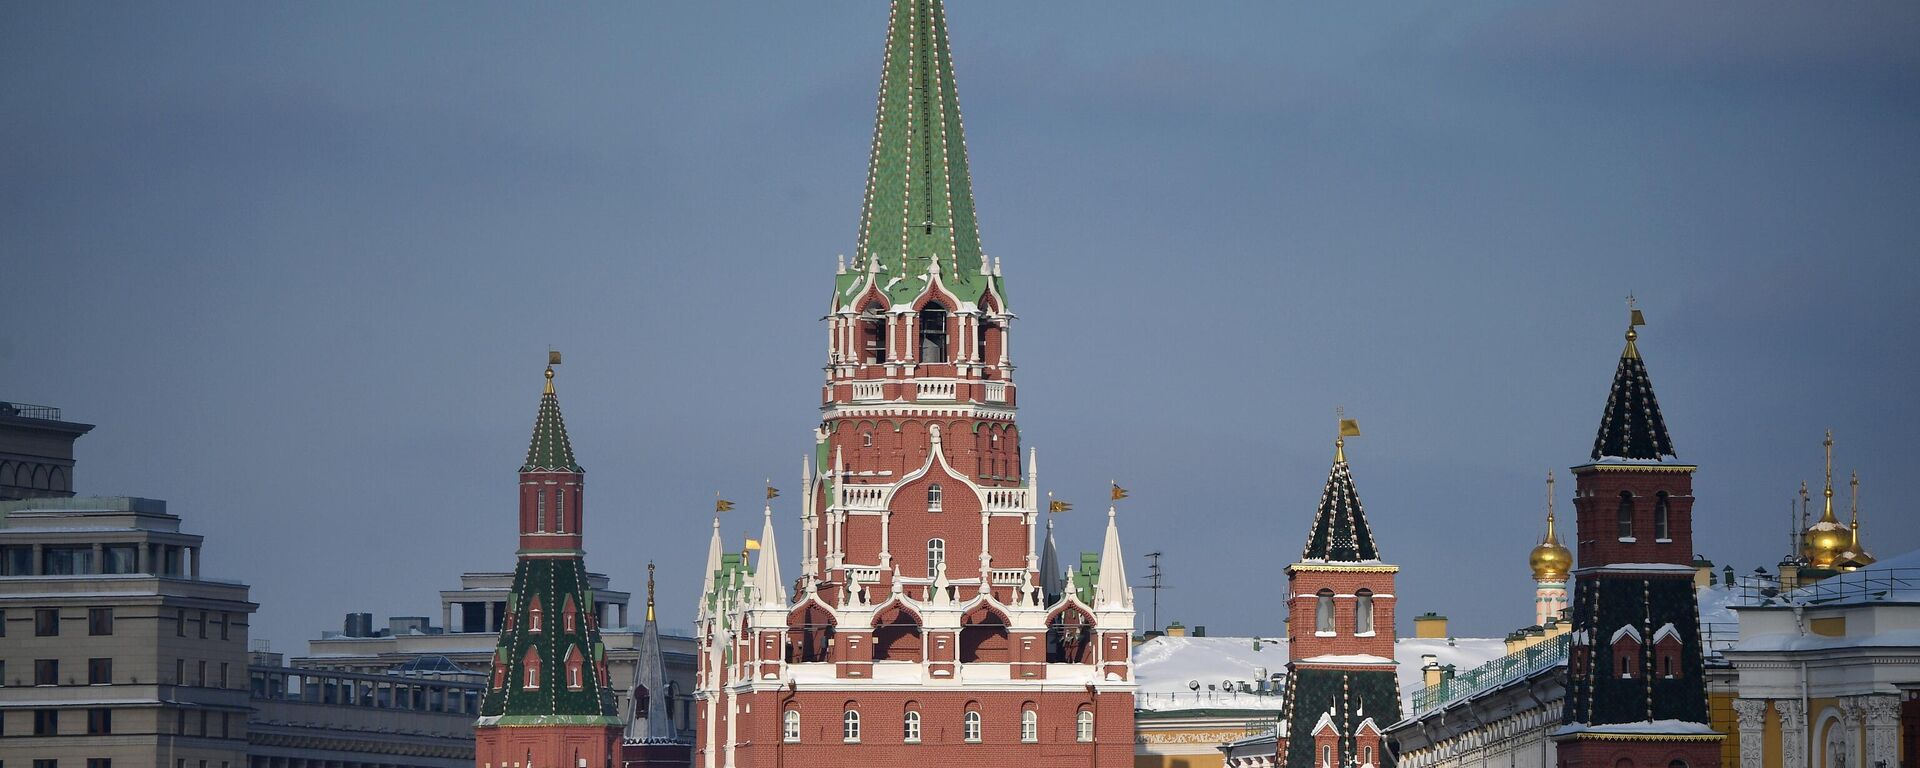 El Kremlin de Moscú, Rusia - Sputnik Mundo, 1920, 11.05.2021